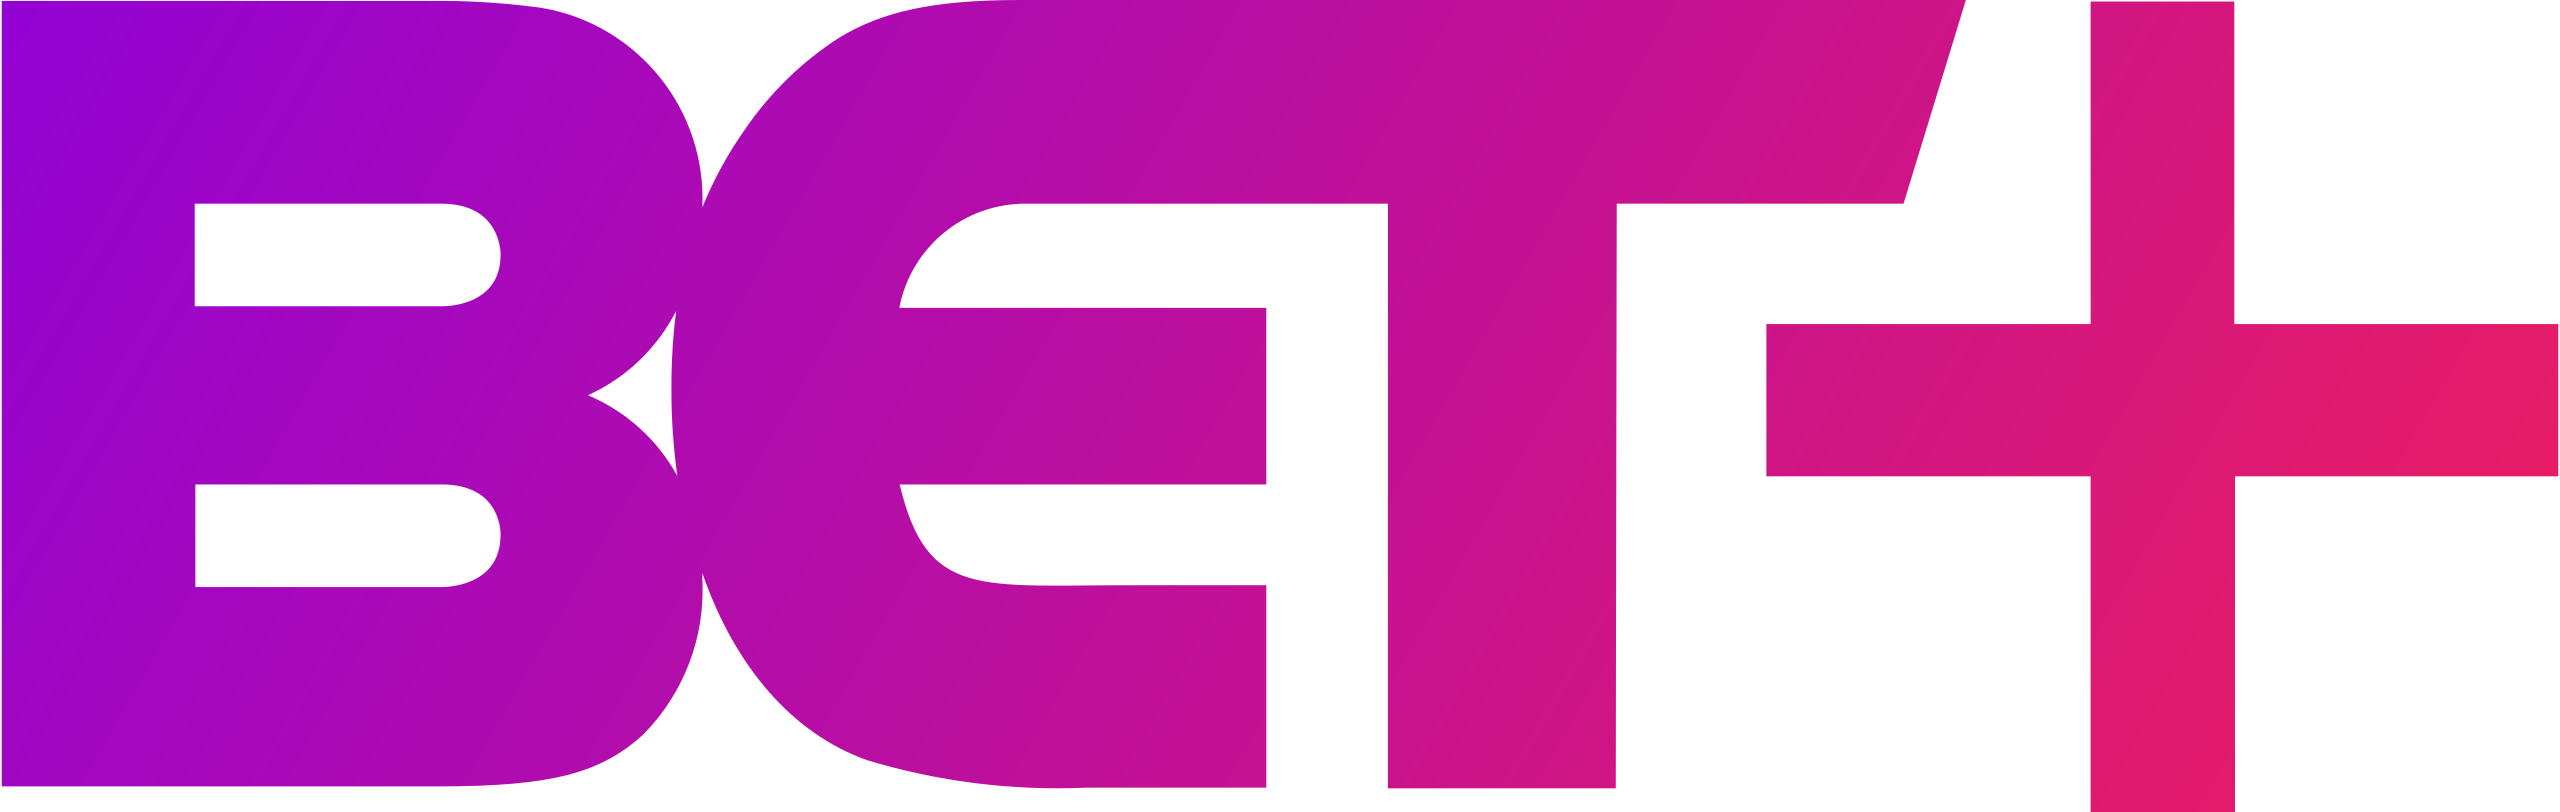 BET+_logo_2019.svg